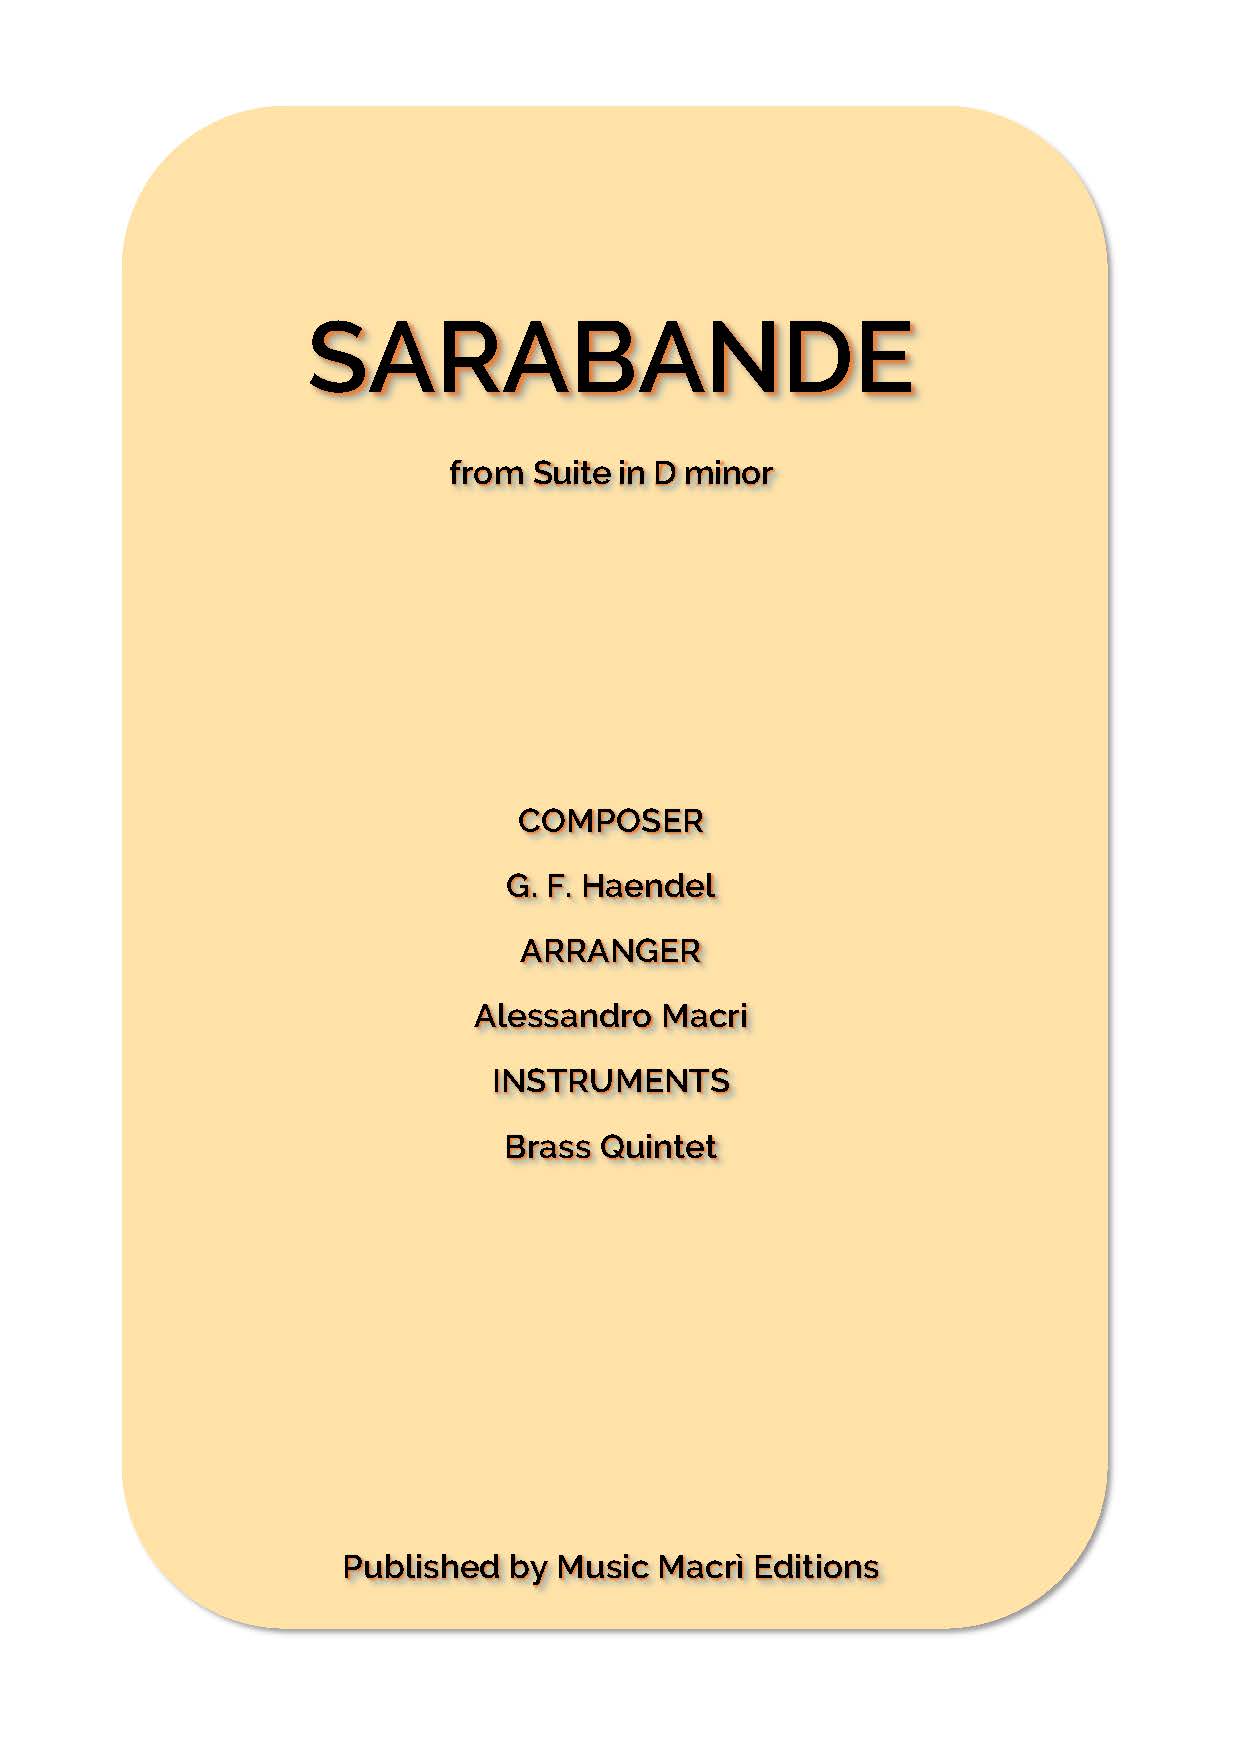 Sarabande Haendel Completo Pagina 01